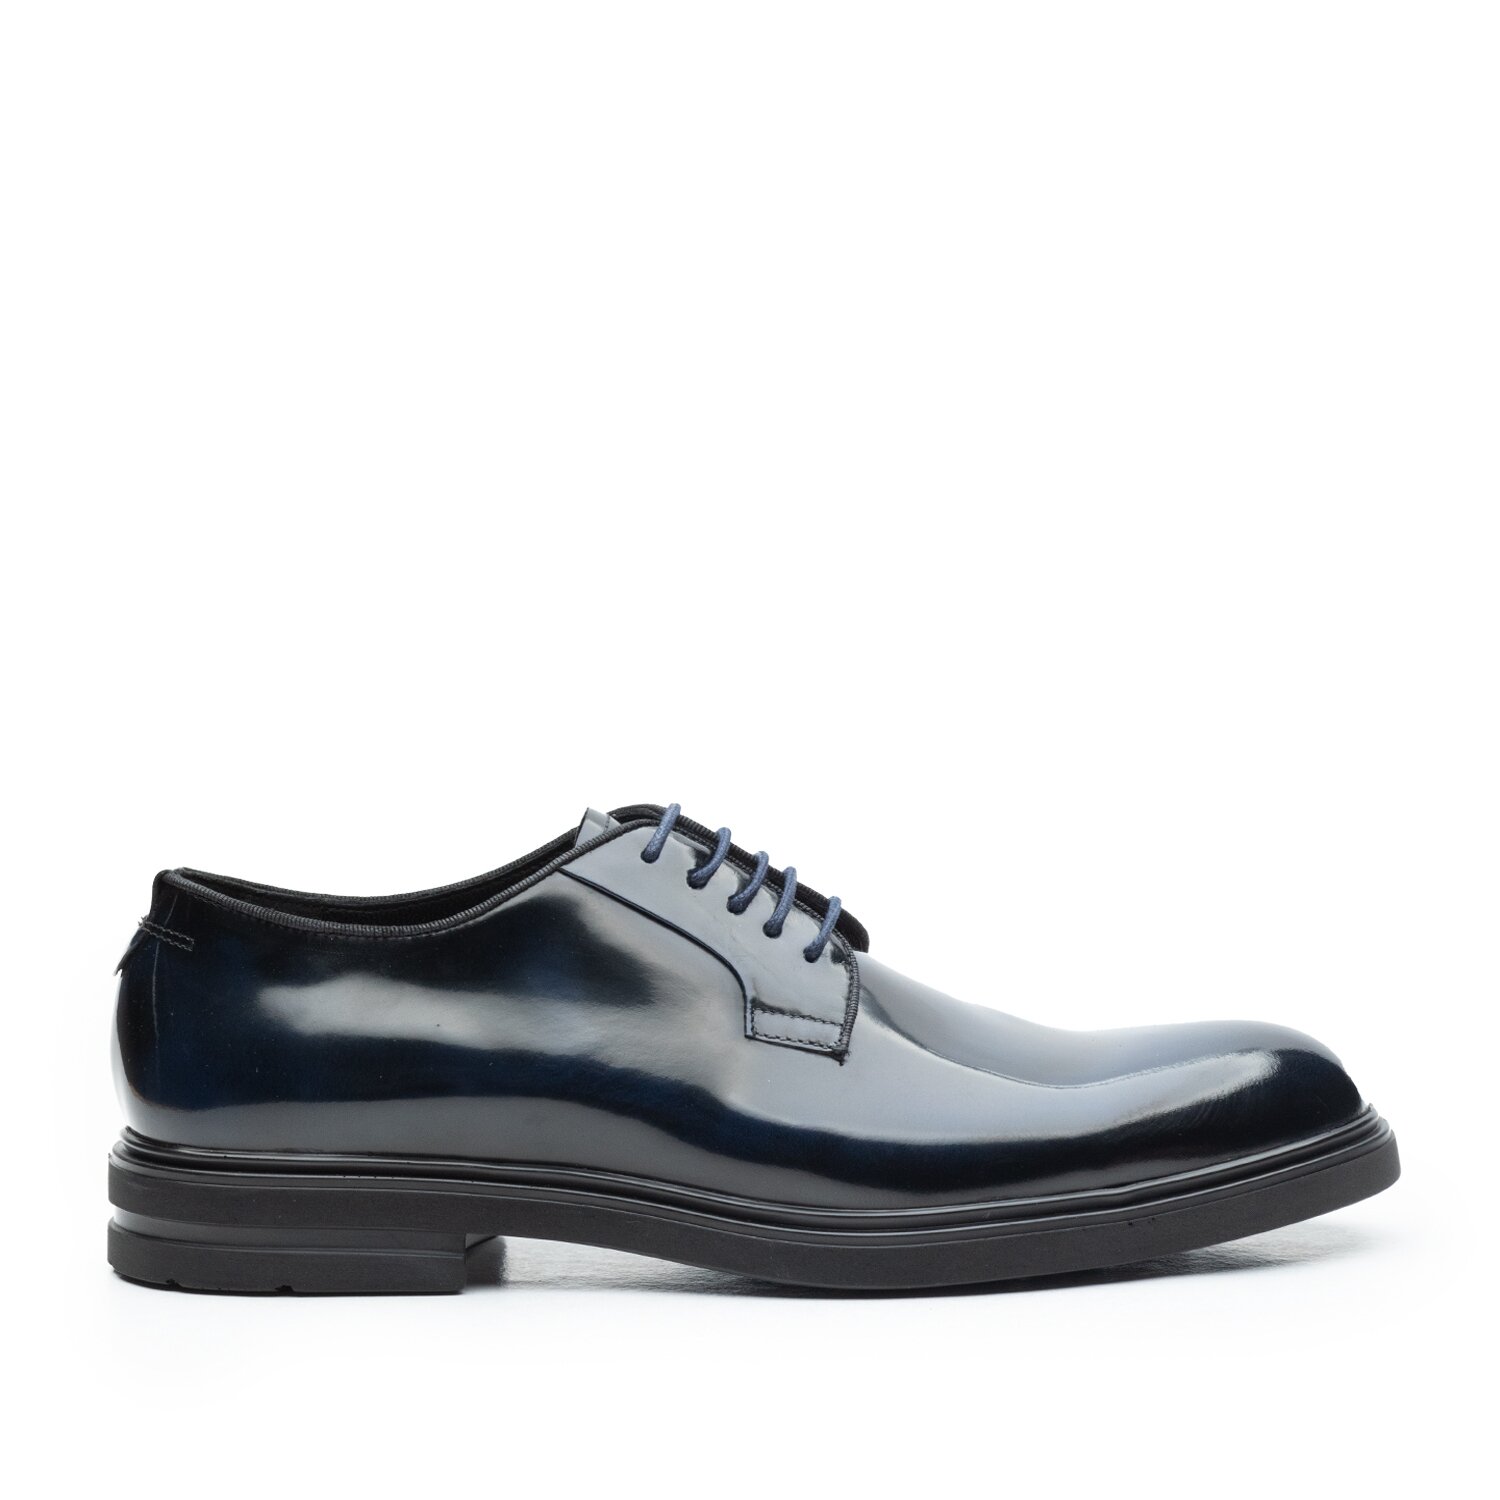 Pantofi casual barbati din piele naturala, Leofex - 960 blue lac